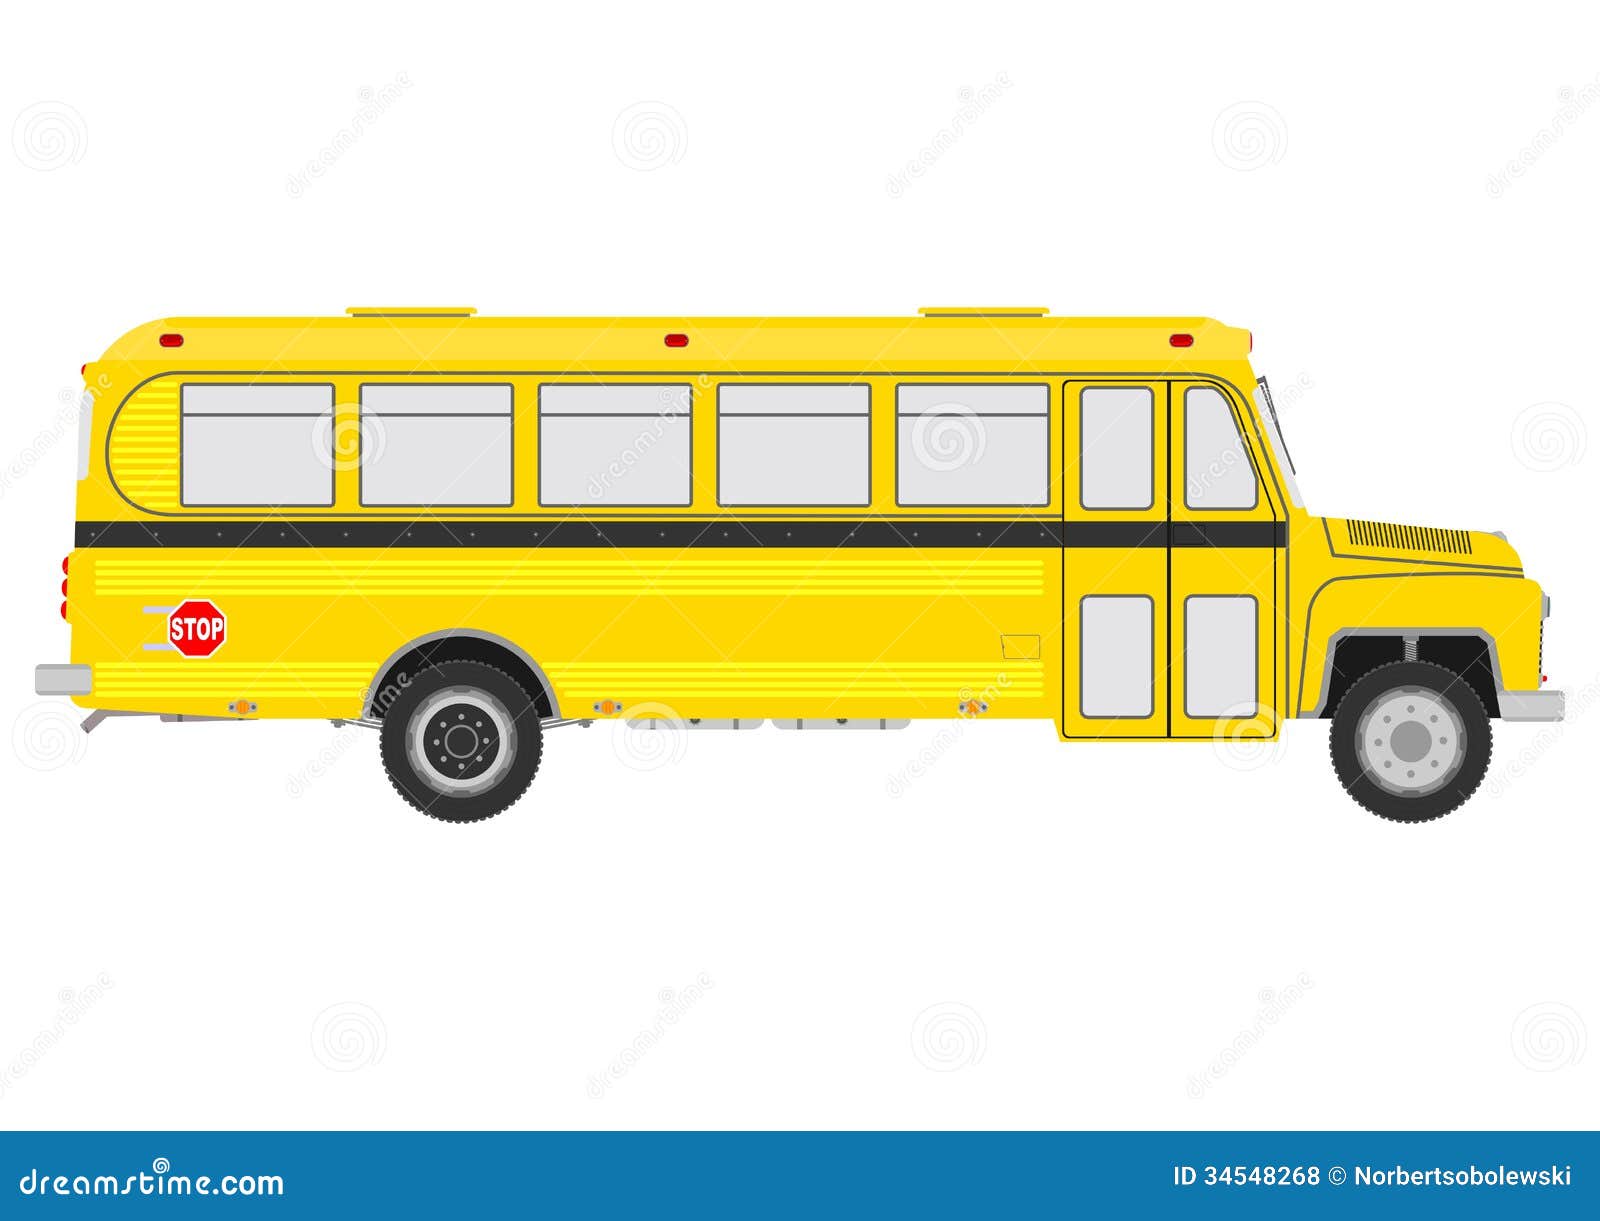 yellow bus clip art - photo #49